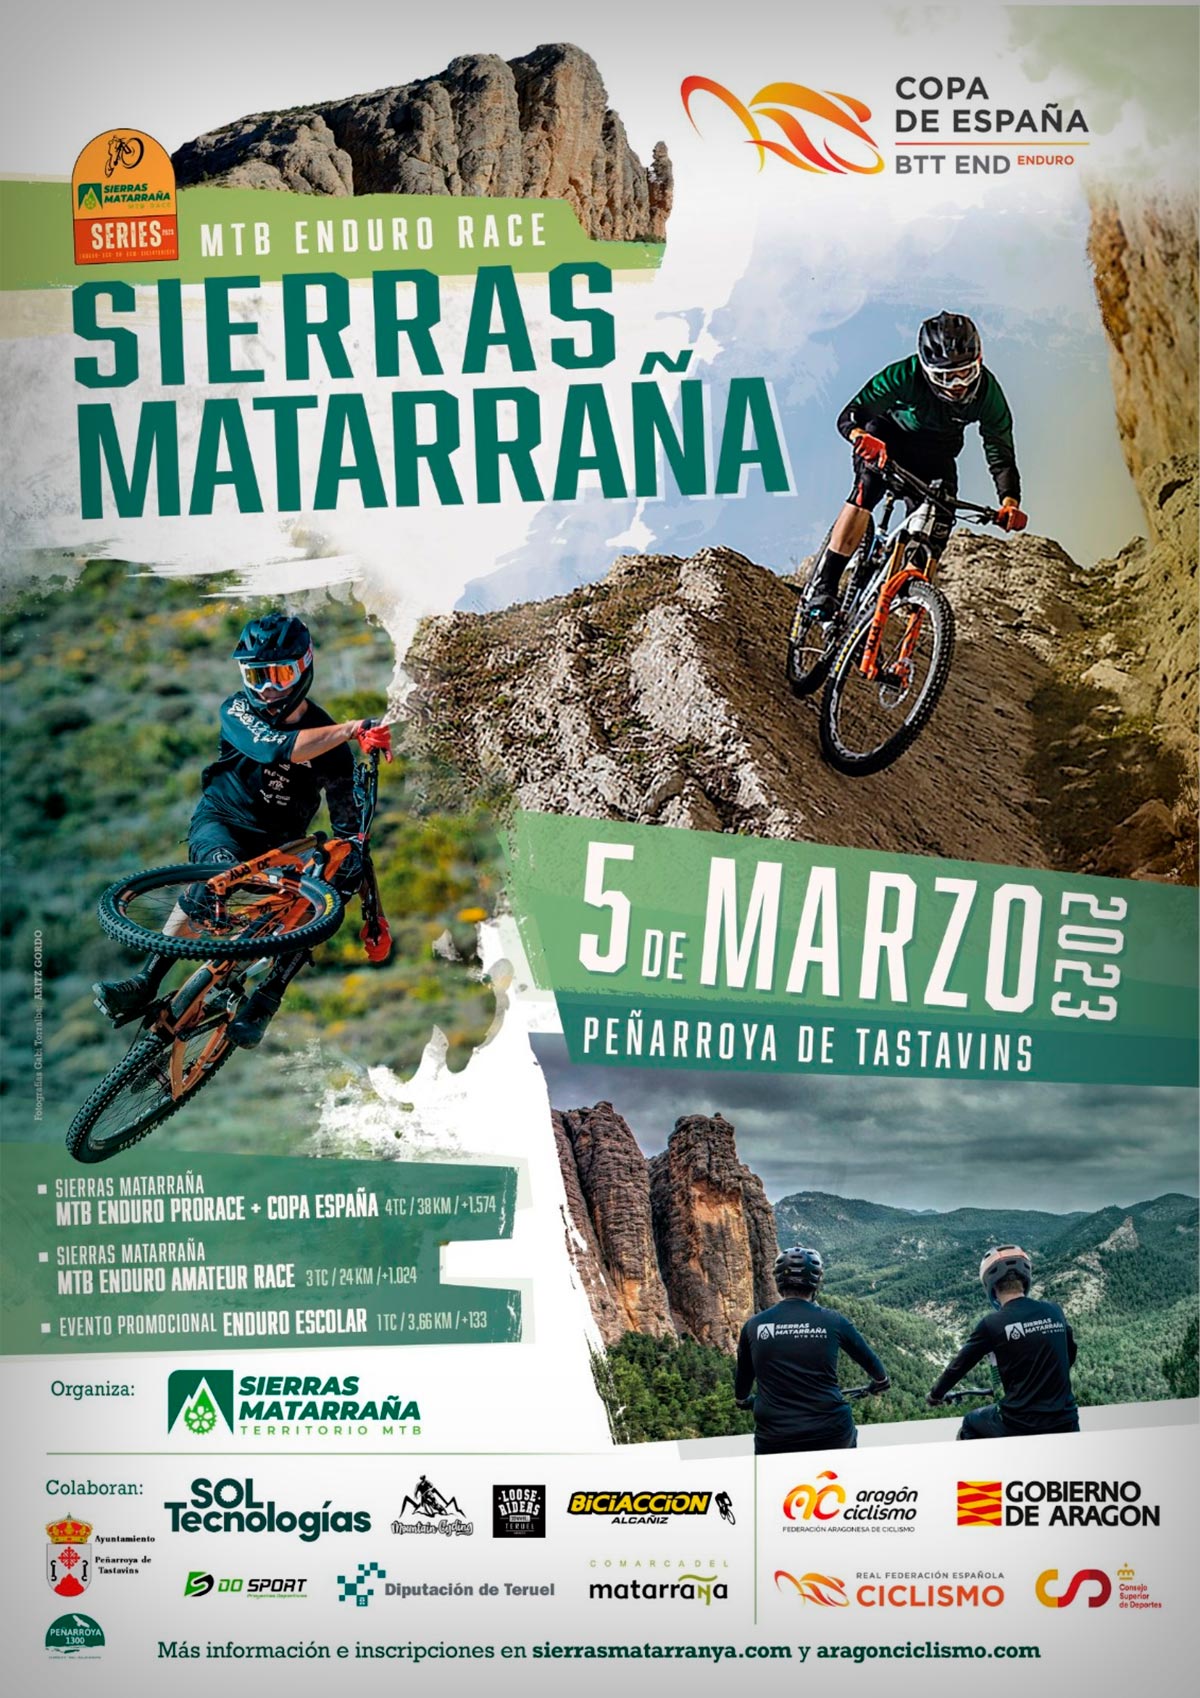 La Copa de España de Enduro arranca con la Sierras Matarraña MTB Enduro Race